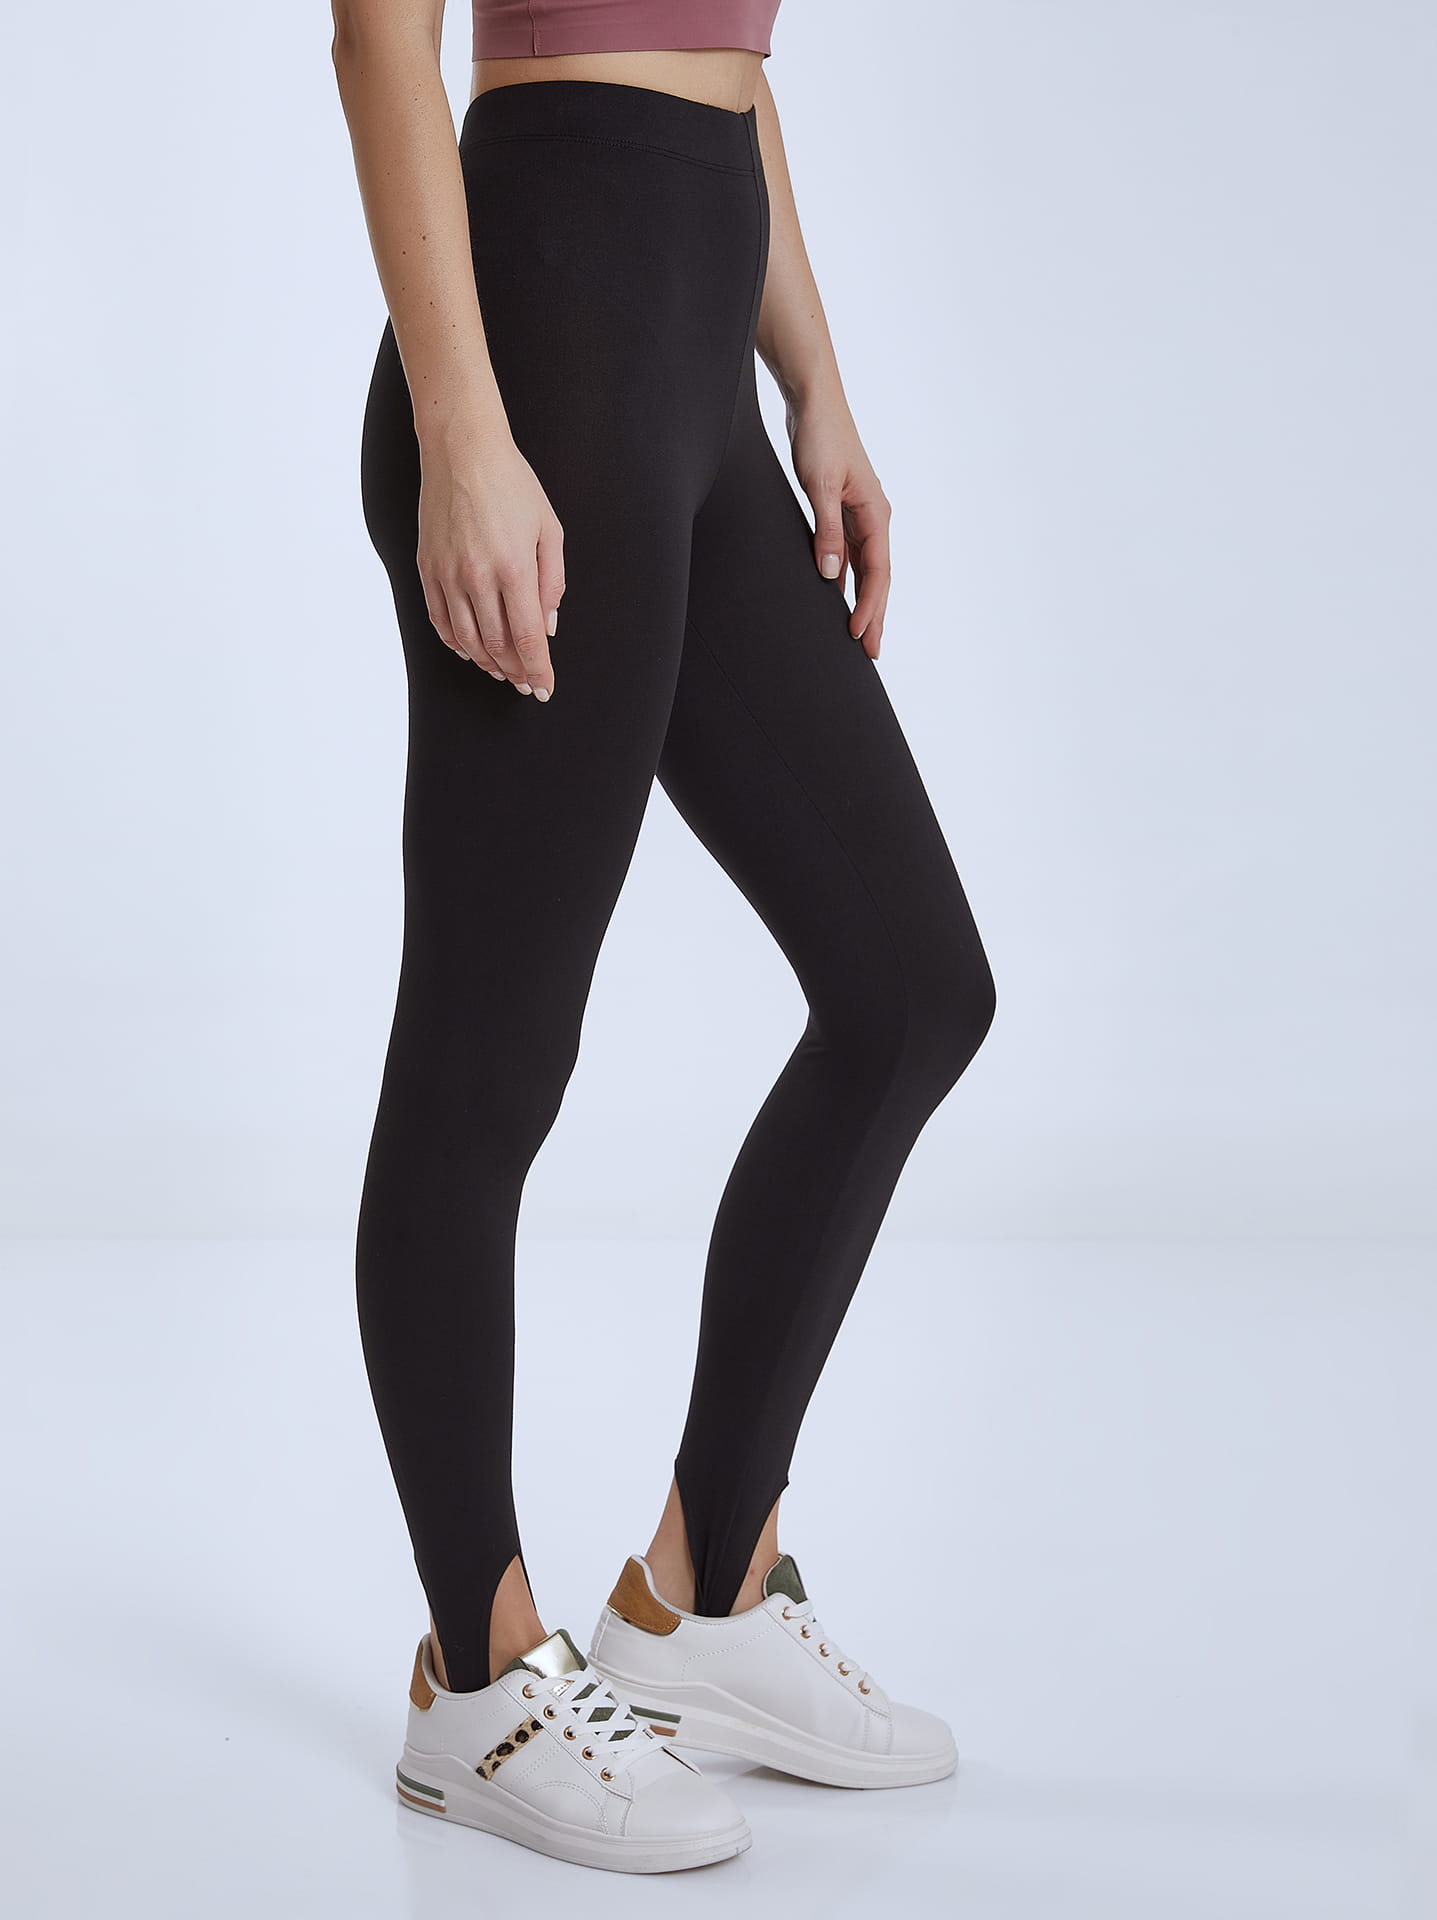 Fuseau leggings in black, 4.99€ | Celestino